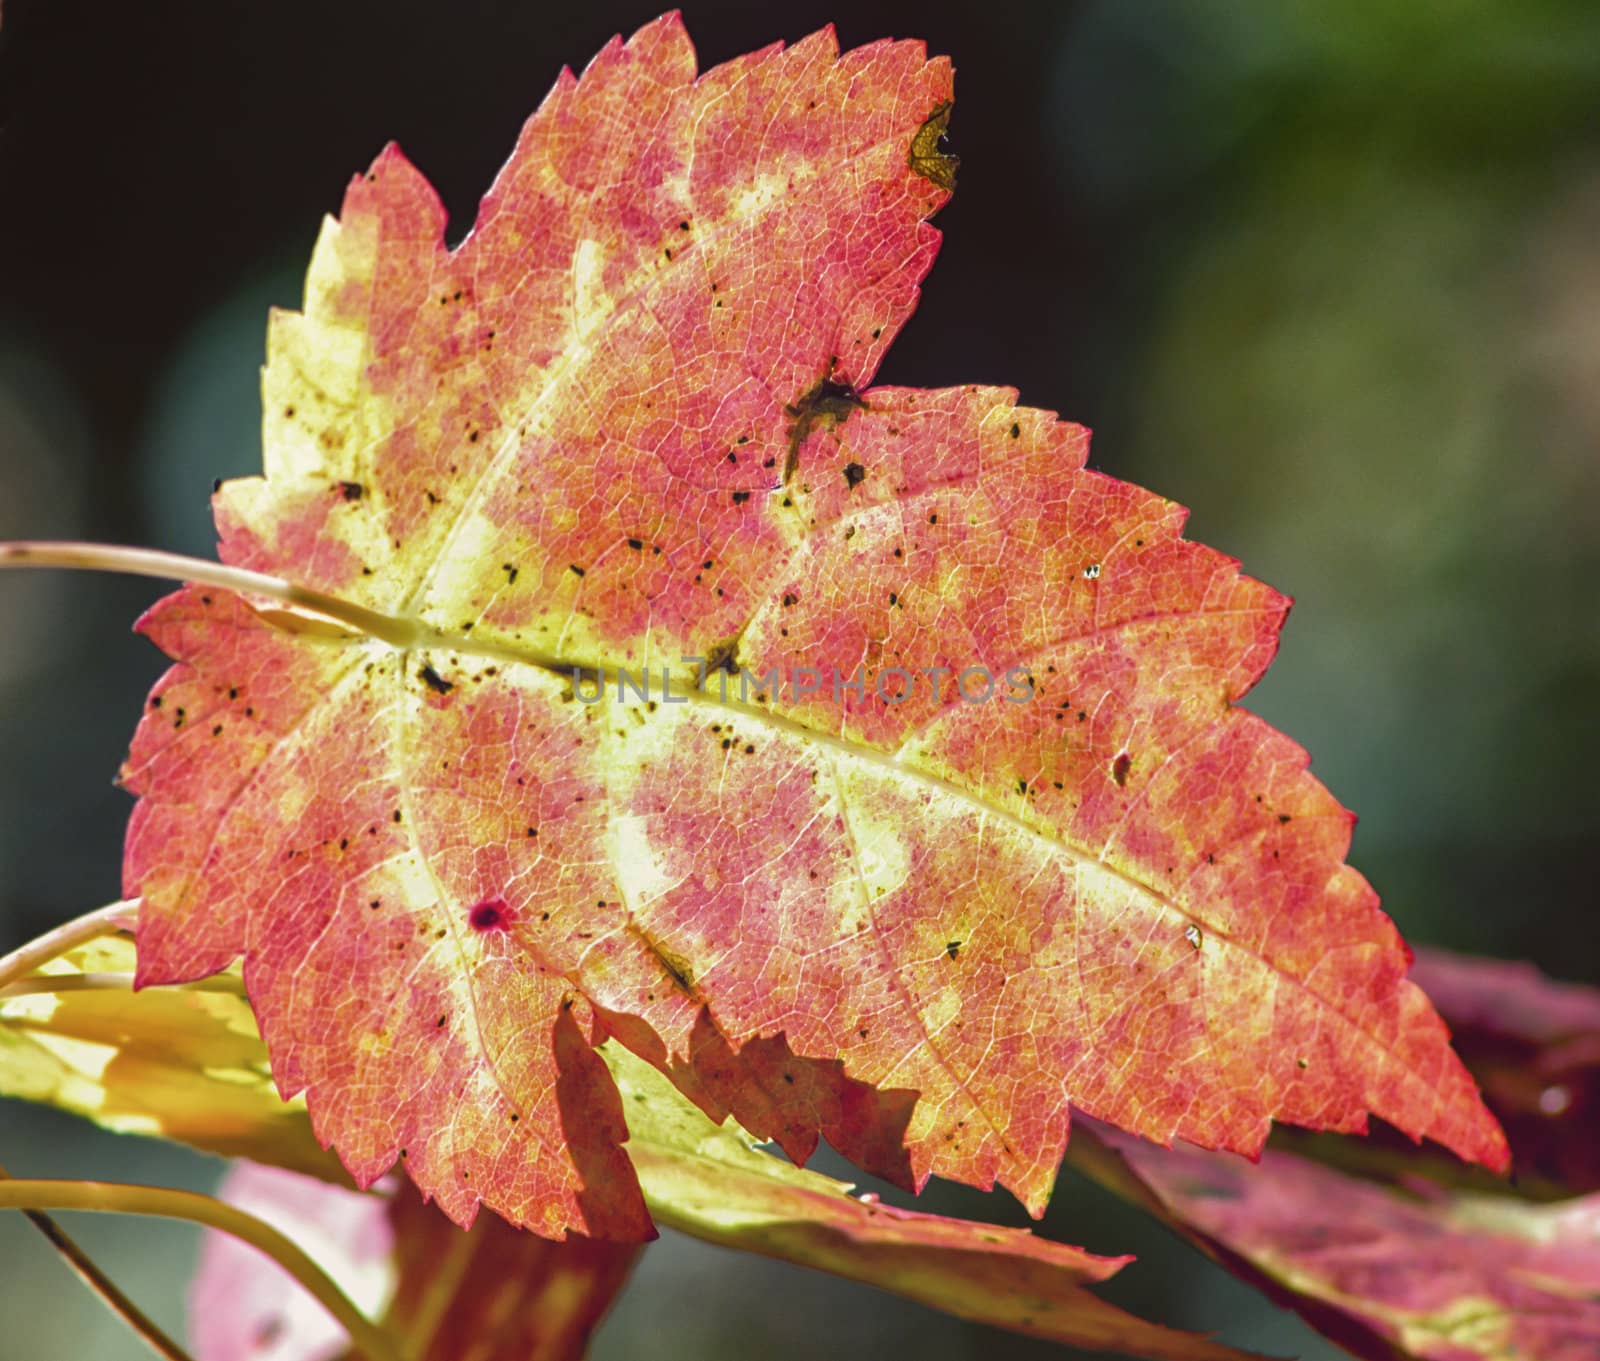 A crimson Maple leaf as reflected in Autumn sunlight.